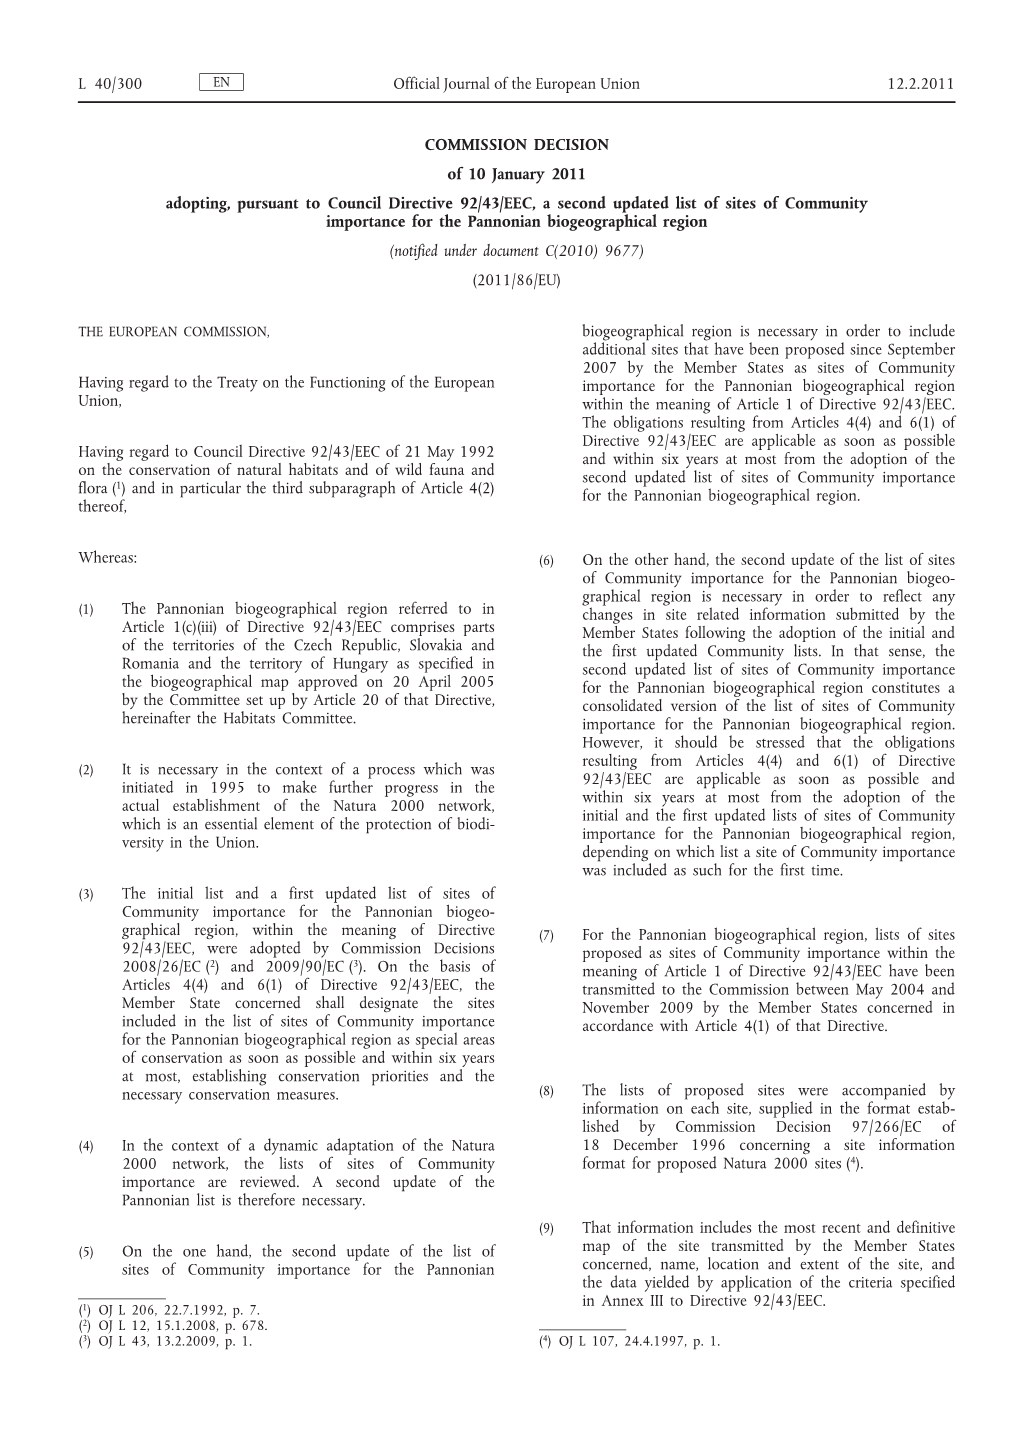 Commission Decision of 10 January 2011 Adopting, Pursuant